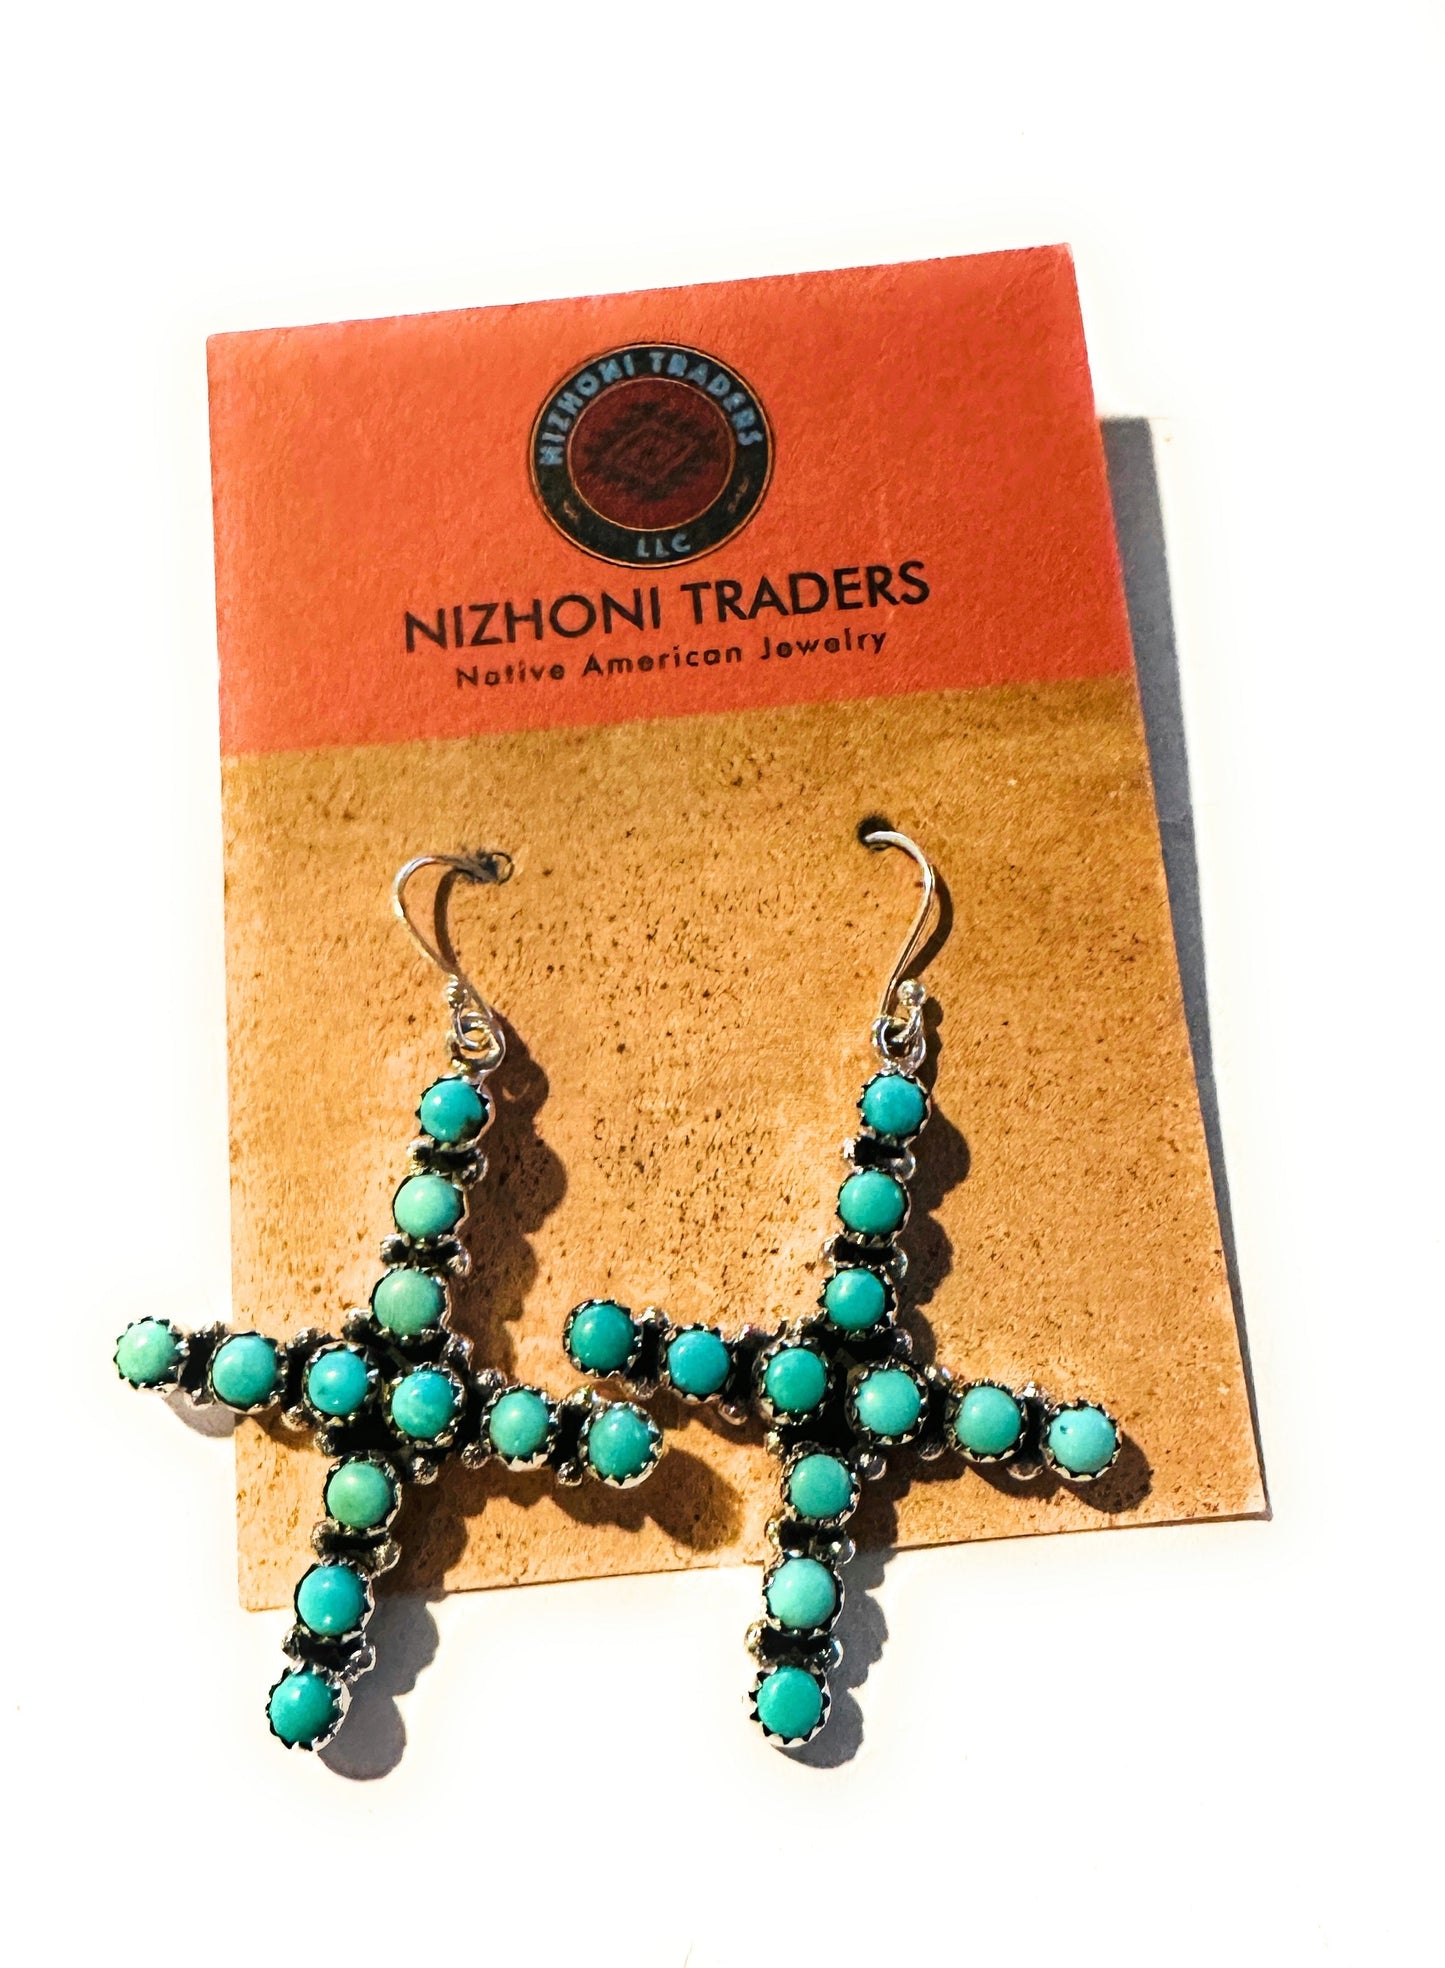 Handmade Turquoise & Sterling Silver Cross Dangle Earrings Signed Nizhoni